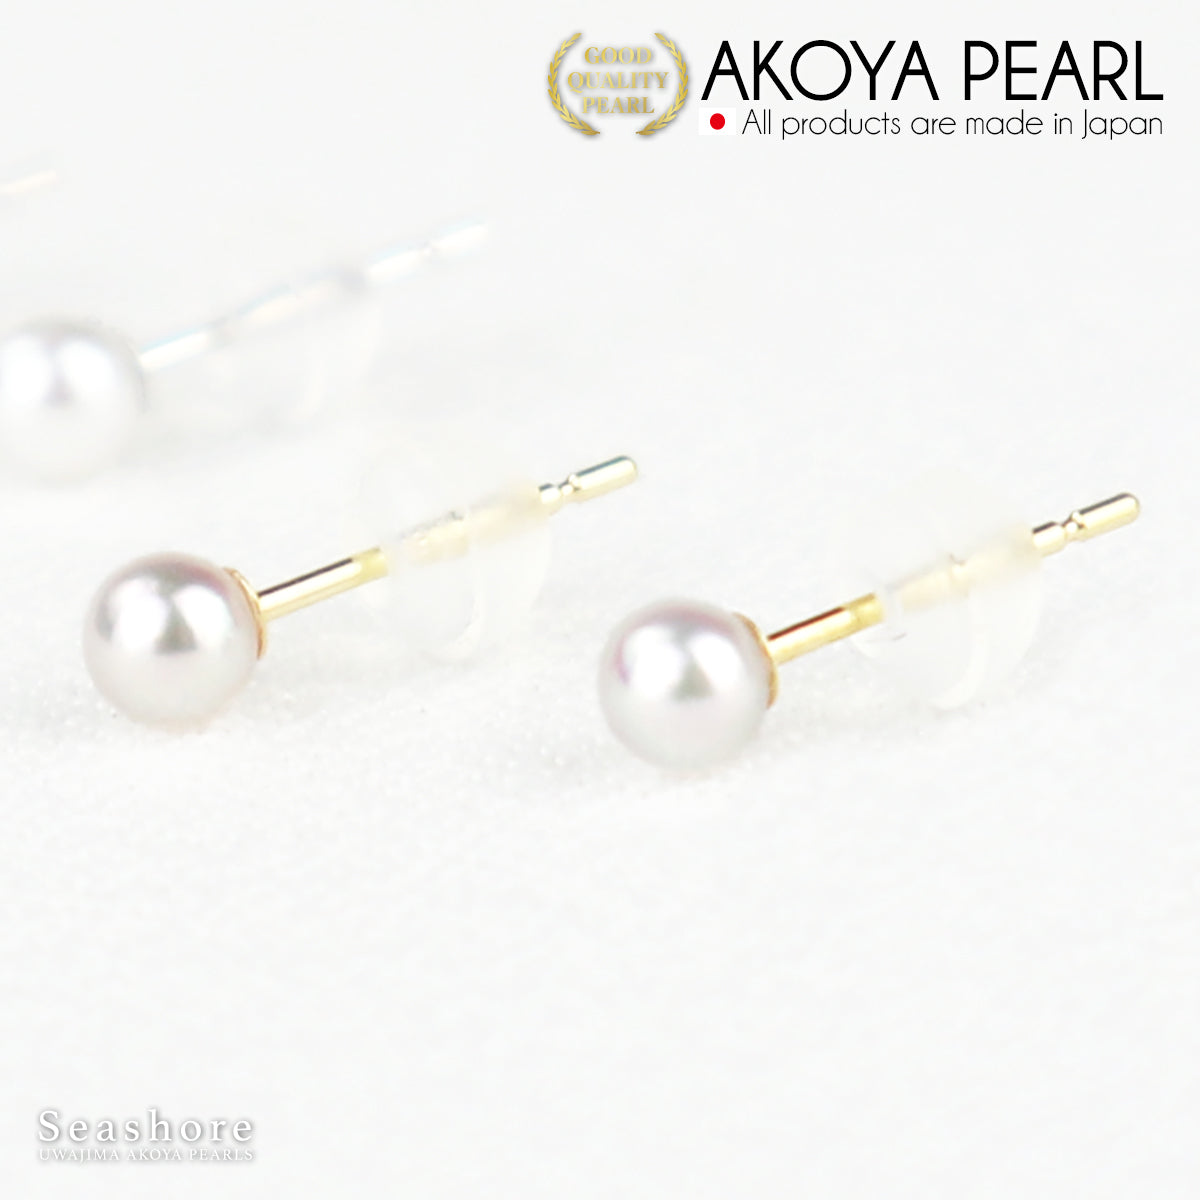 Baby pearl stud earrings [3.0-3.5mm] 2 types ≪ K18G K14WG ≫ Gold/white gold Akoya pearls